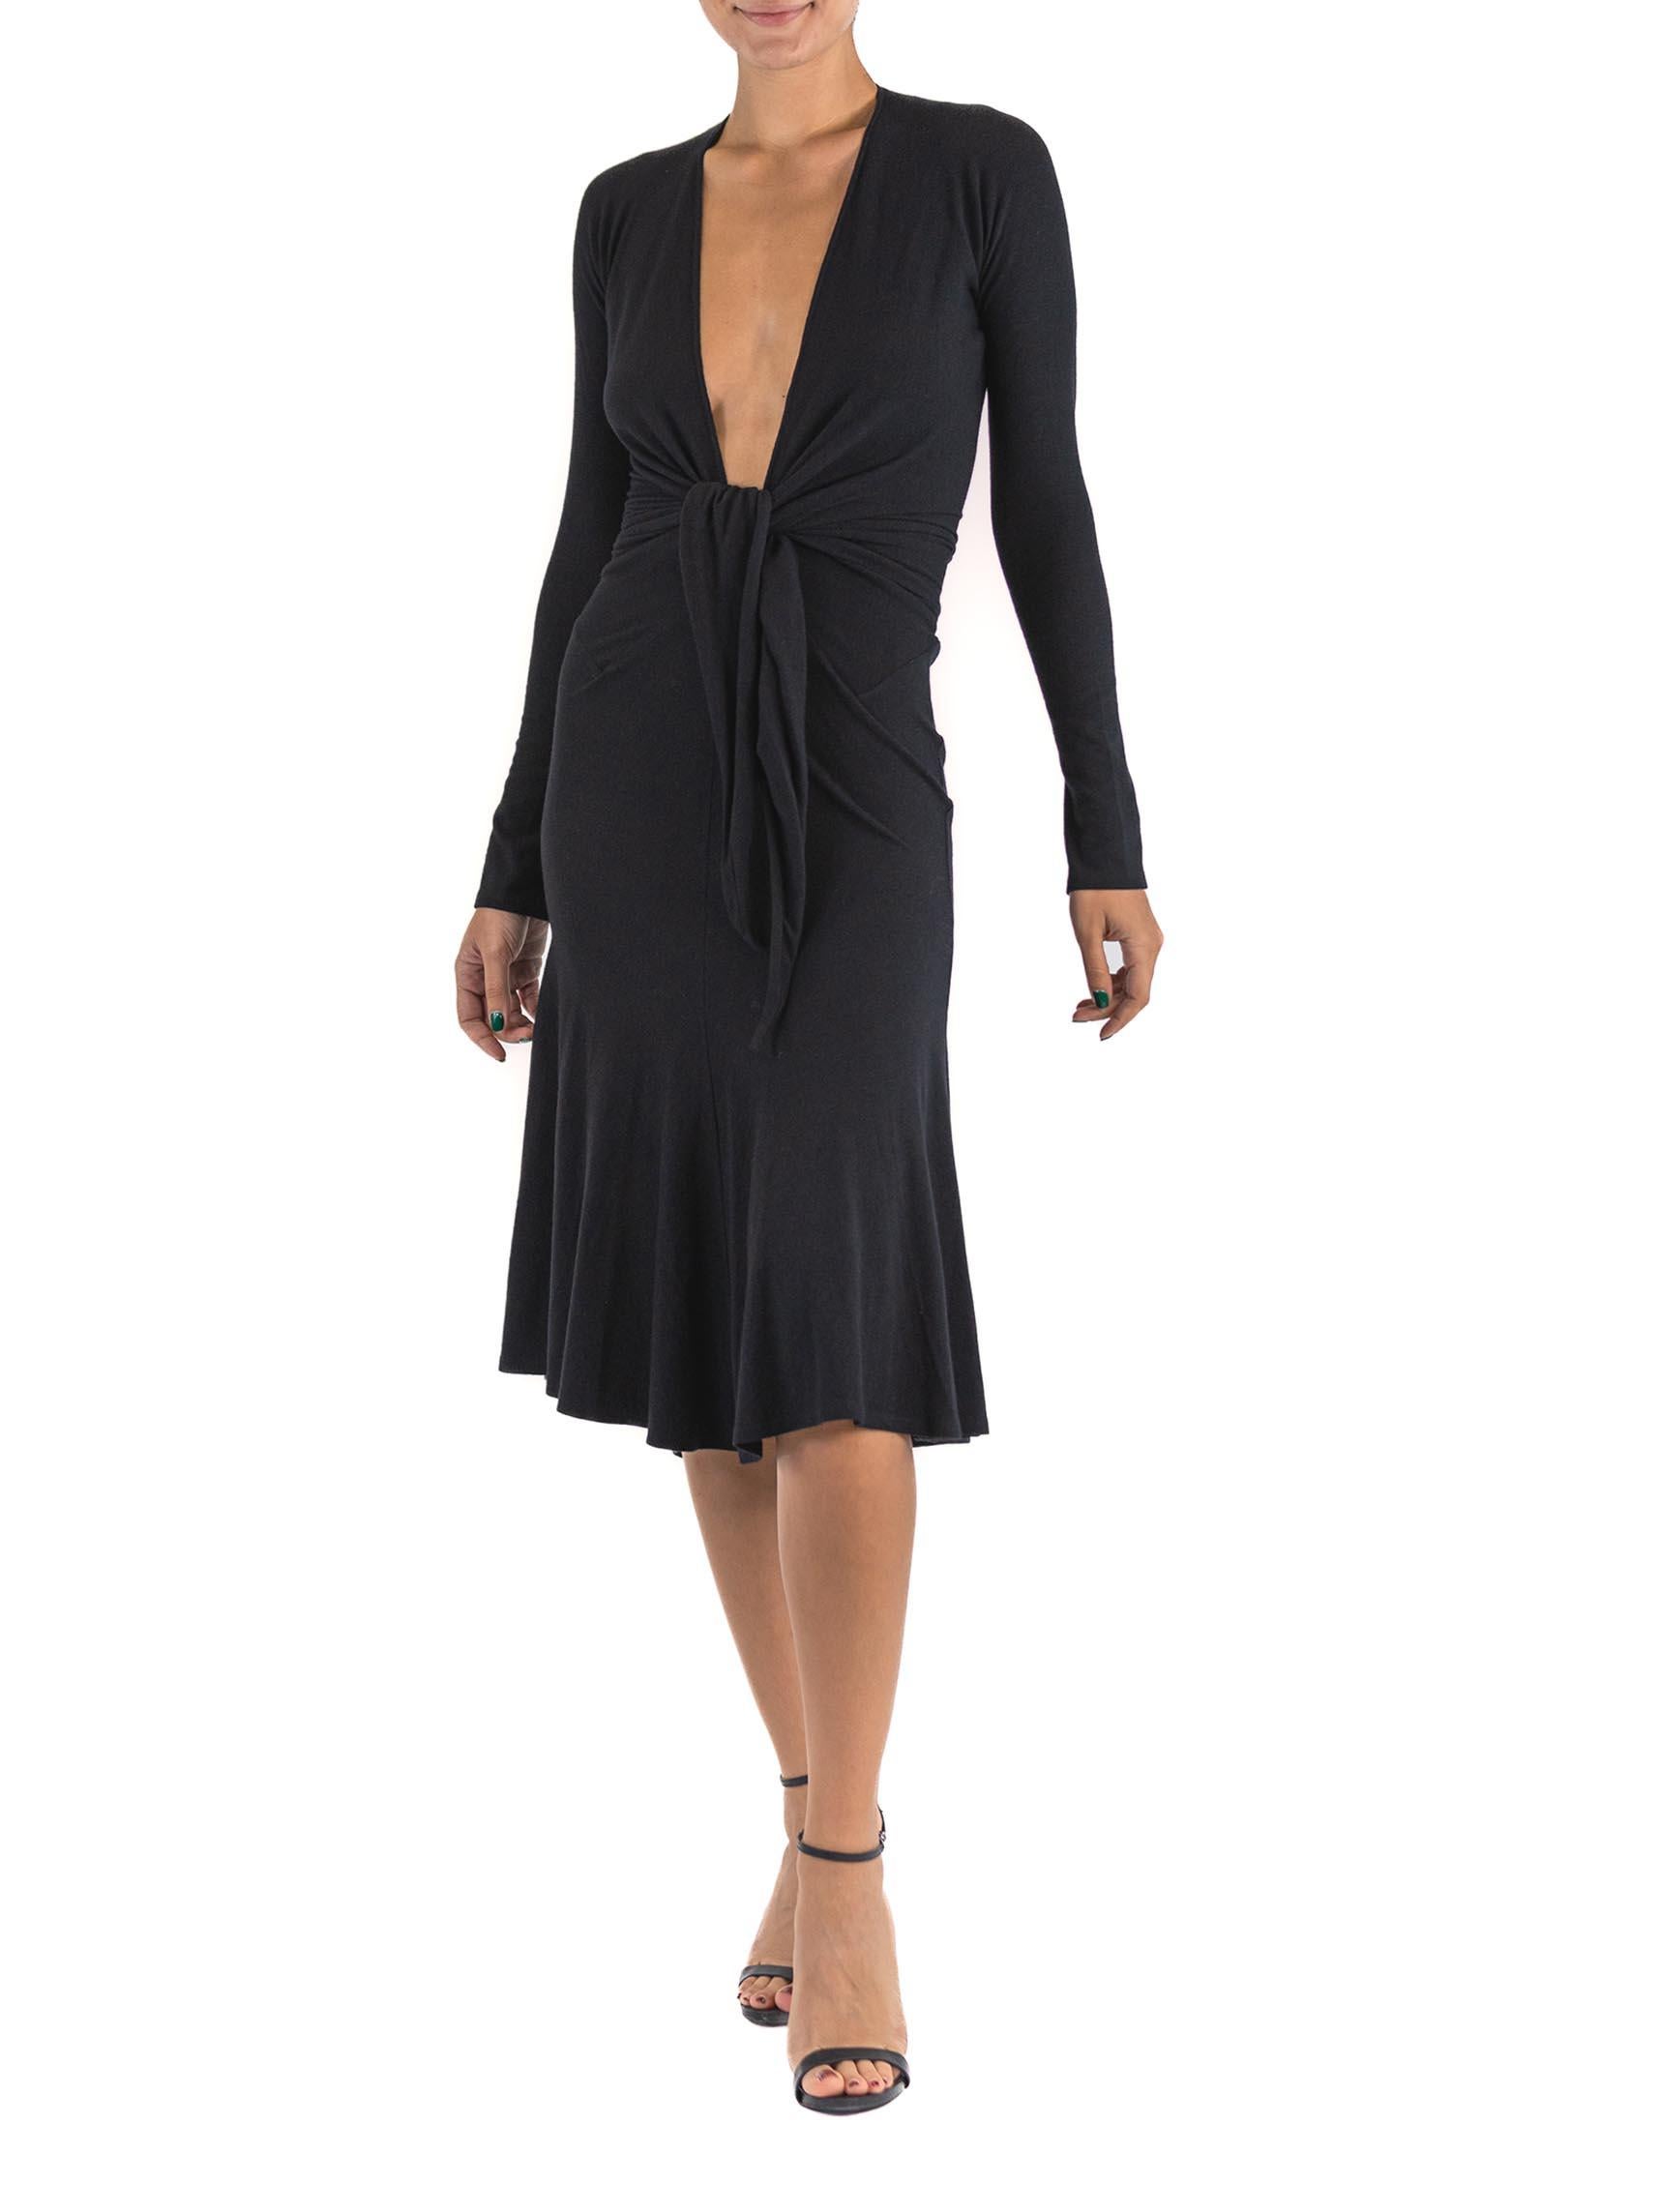 1990S DONNA KARAN Black Wool Jersey Deeep V Neckline Tie Front Dress With Sleev For Sale 3